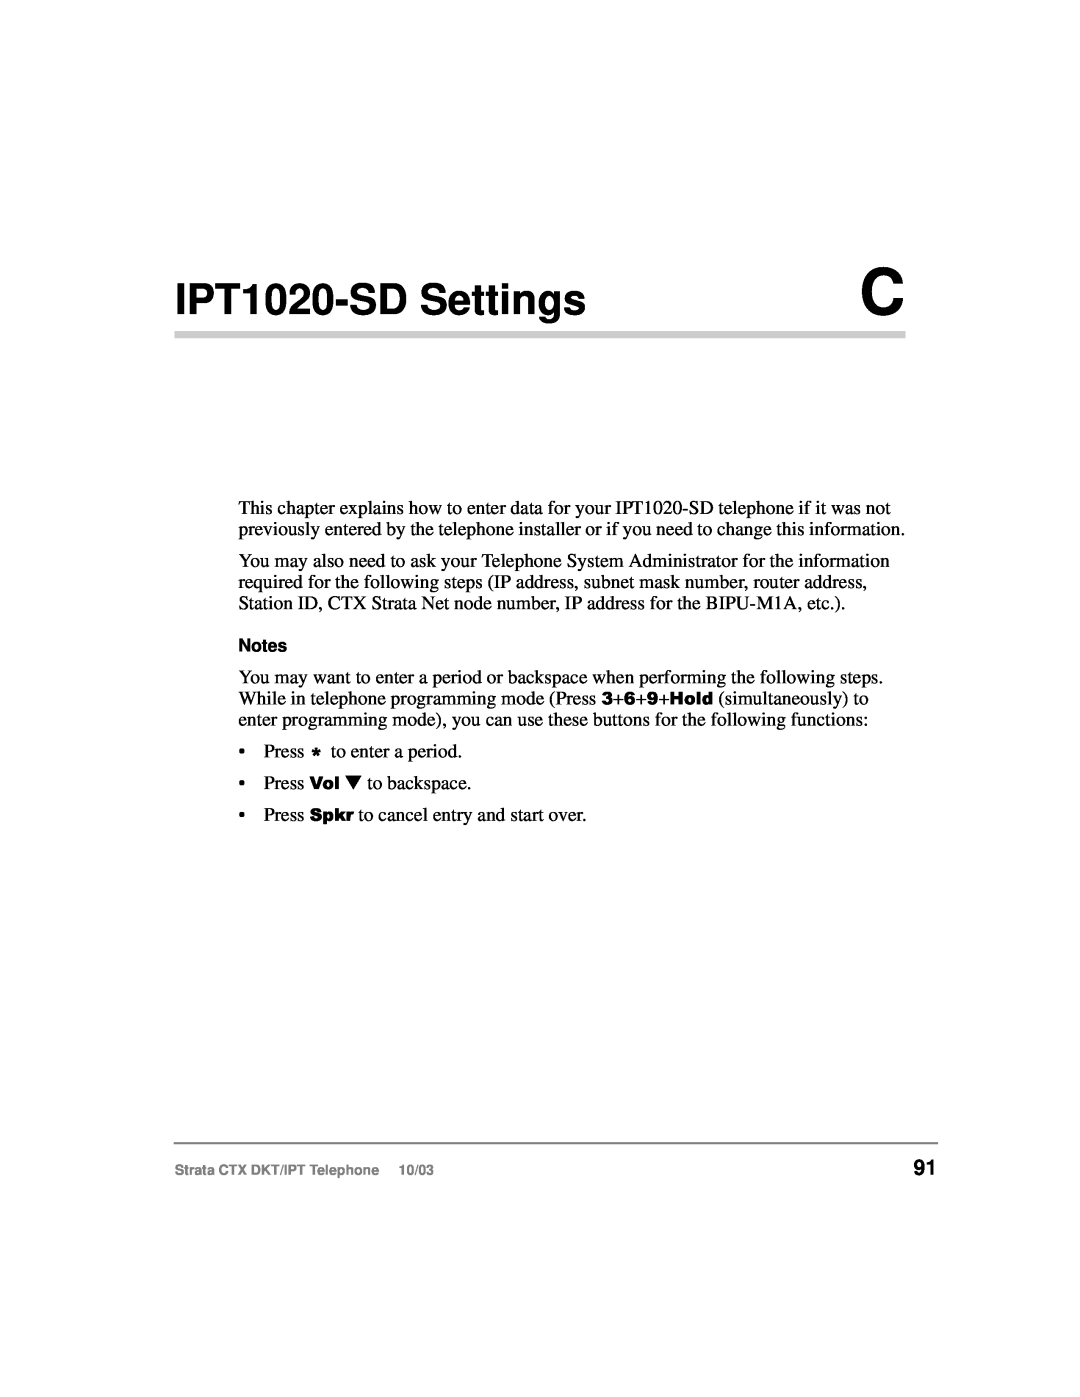 Toshiba DKT manual IPT1020-SD Settings 